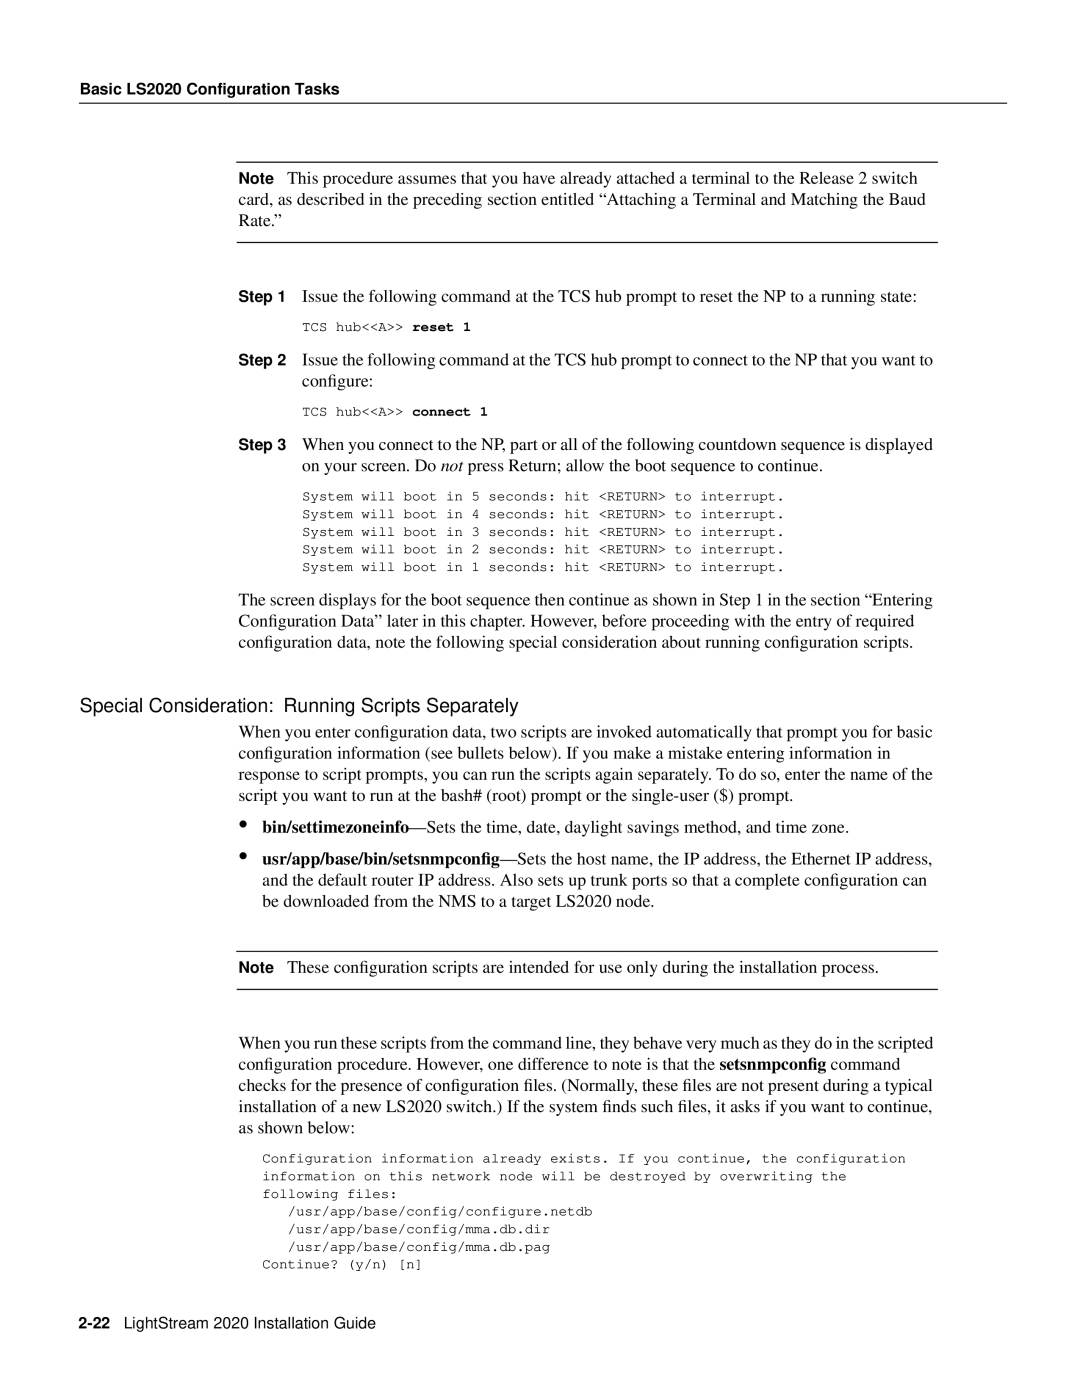 Cisco Systems manual Special Consideration Running Scripts Separately, LightStream 2020 Installation Guide 